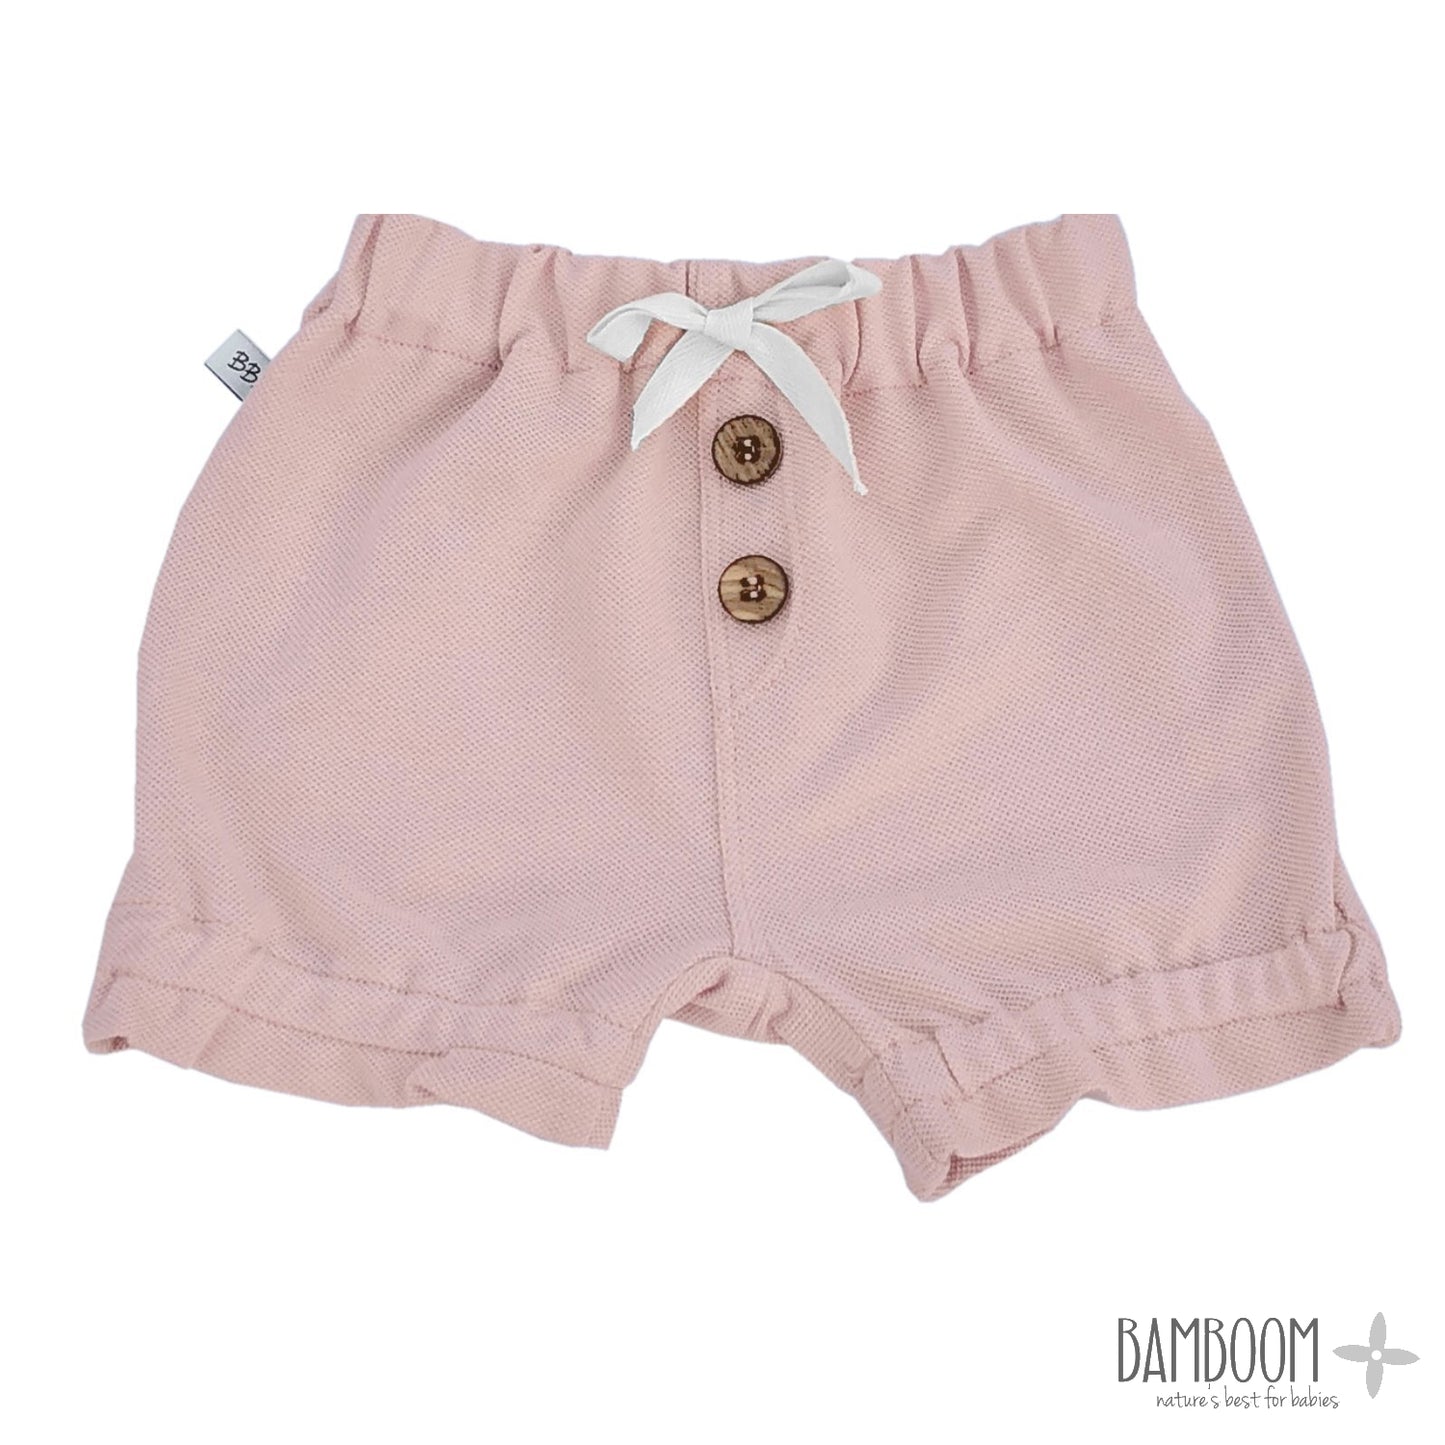 Bamboom - Pink Baby Girl Shorts in Bamboo Fiber